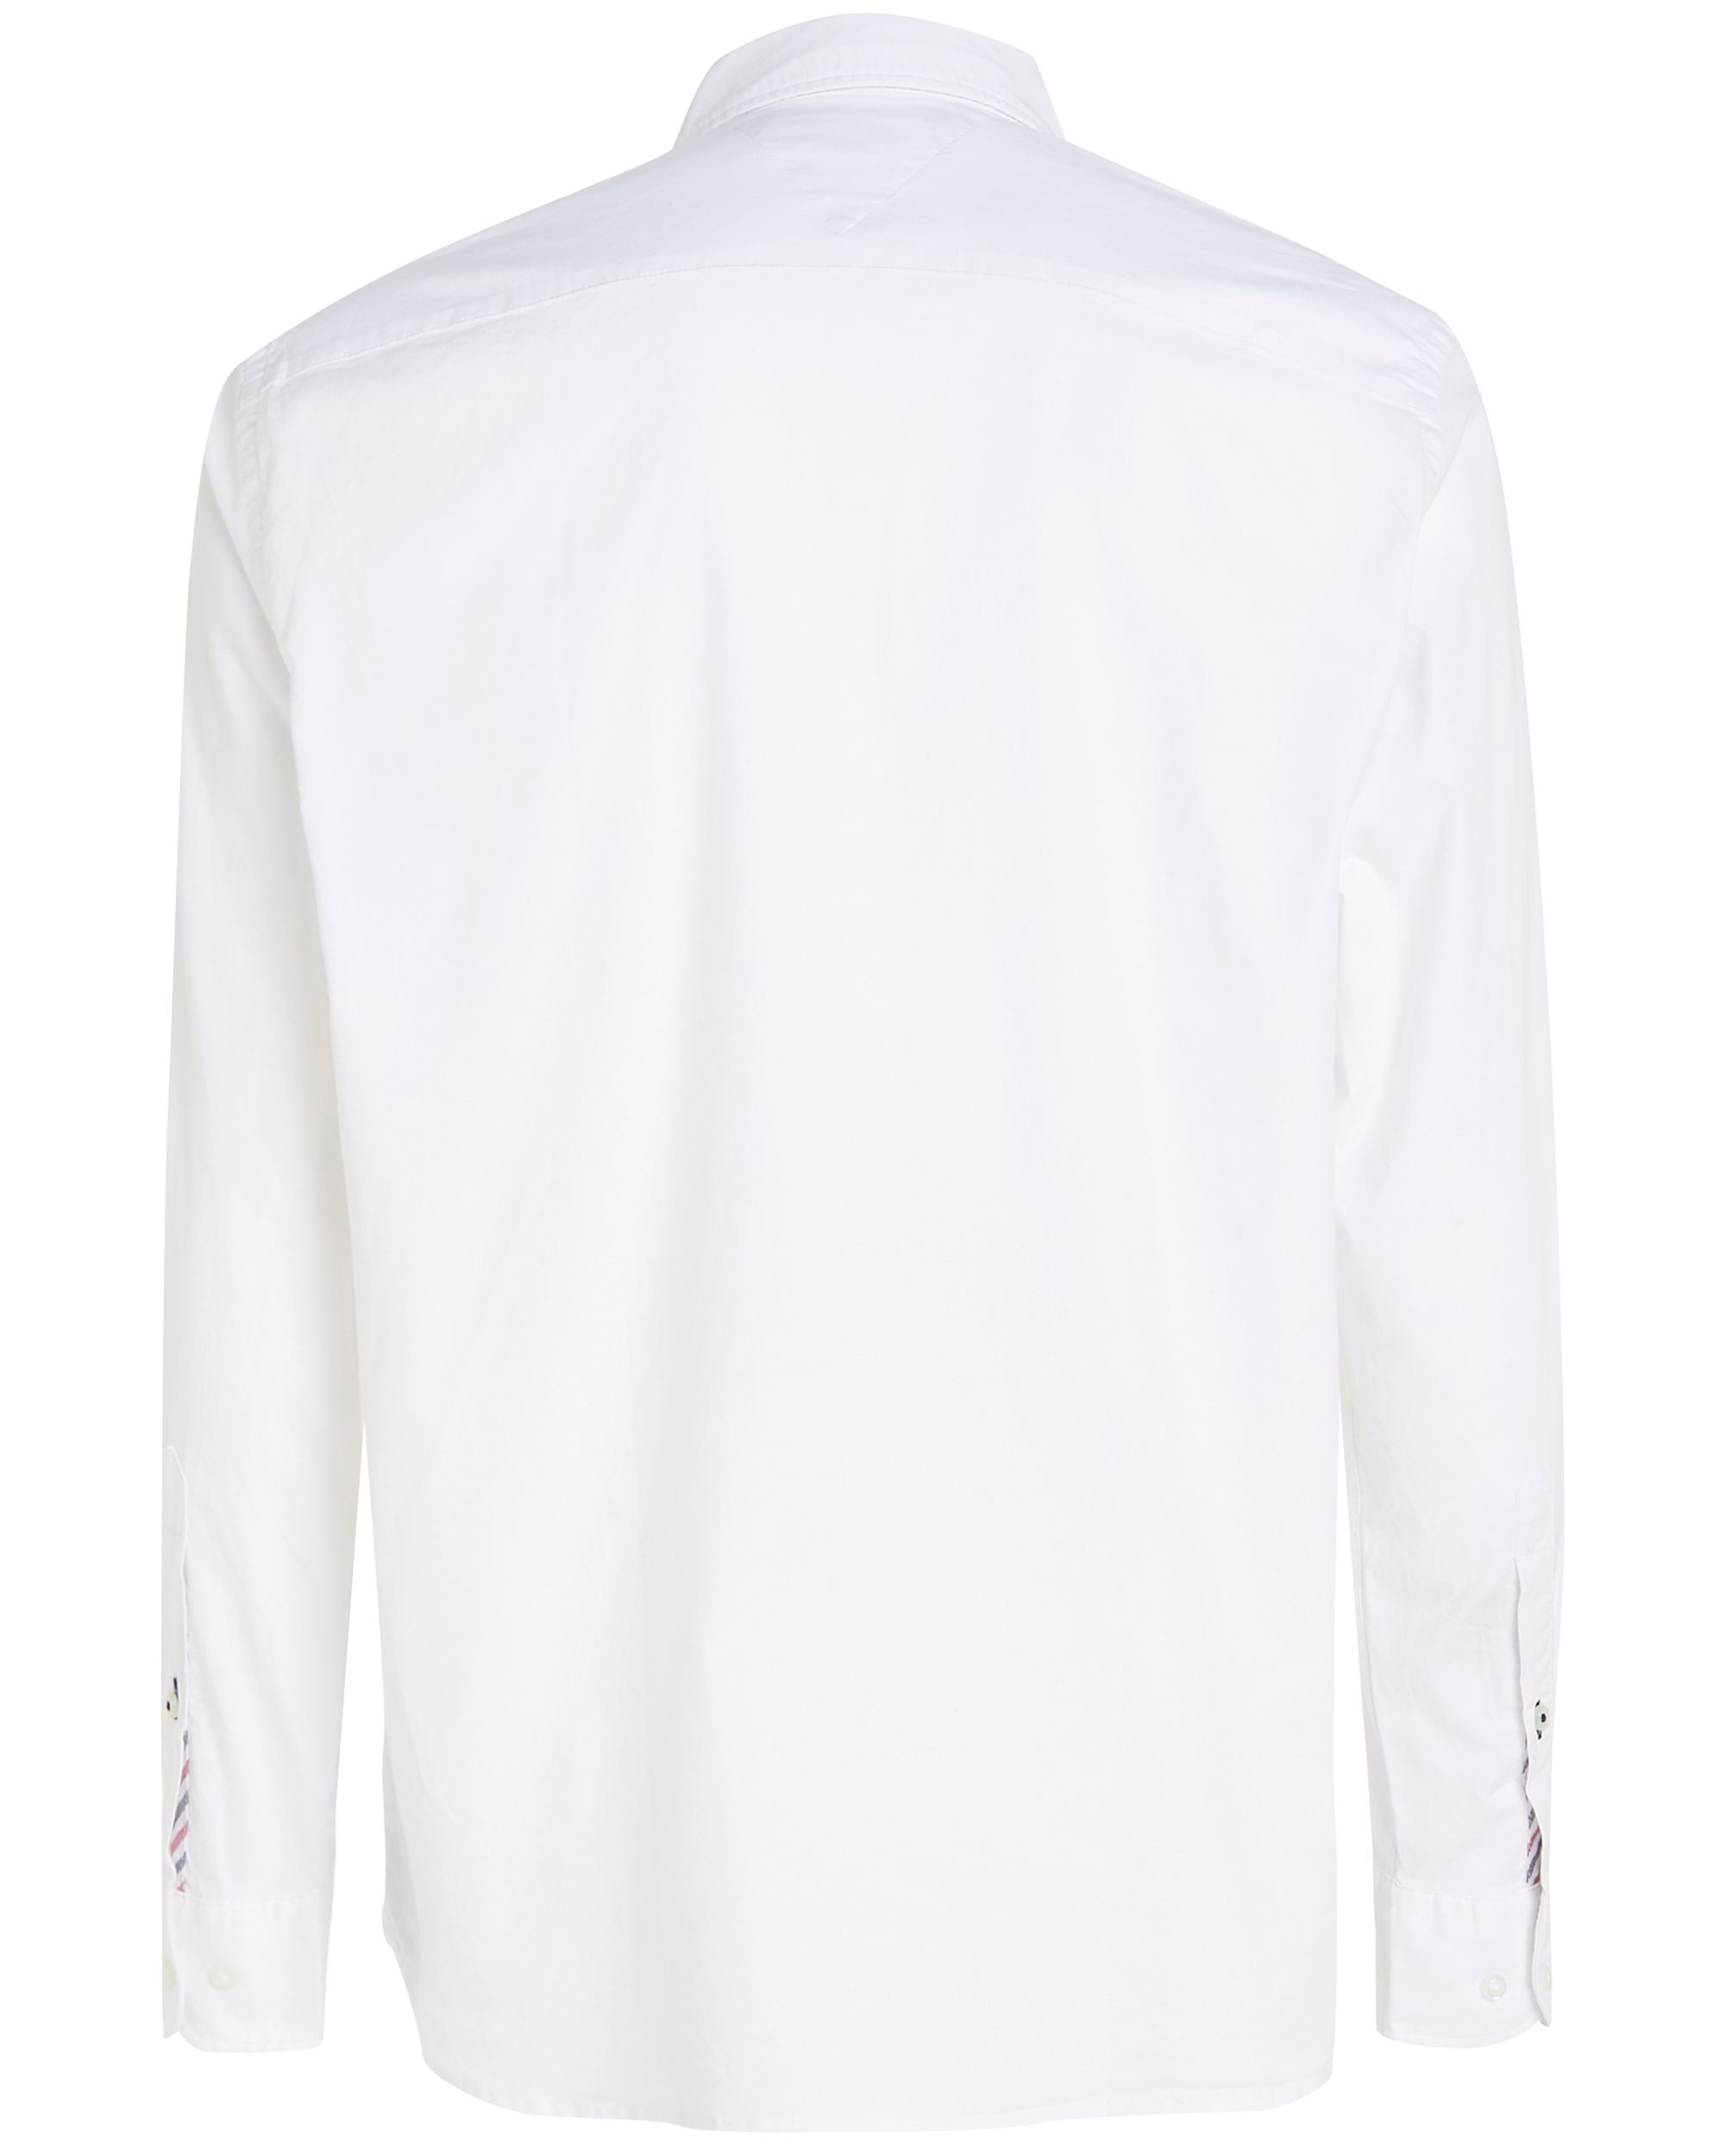 Tommy Hilfiger Menswear Casual Overhemd LM Wit 092598-001-L